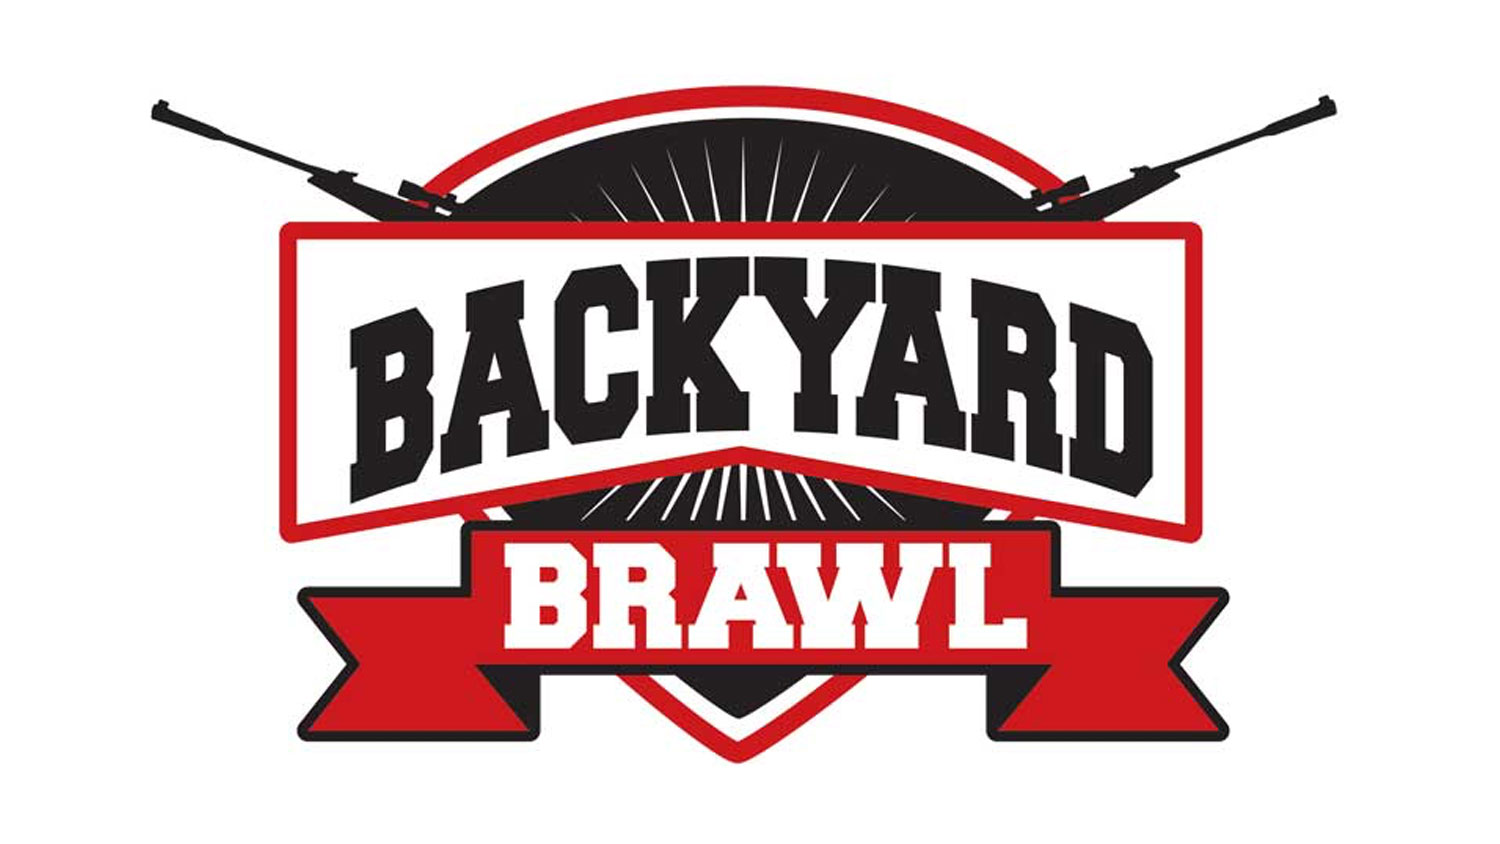 Pyramyd Air’s Backyard Brawl Video Contest An NRA Shooting Sports Journal